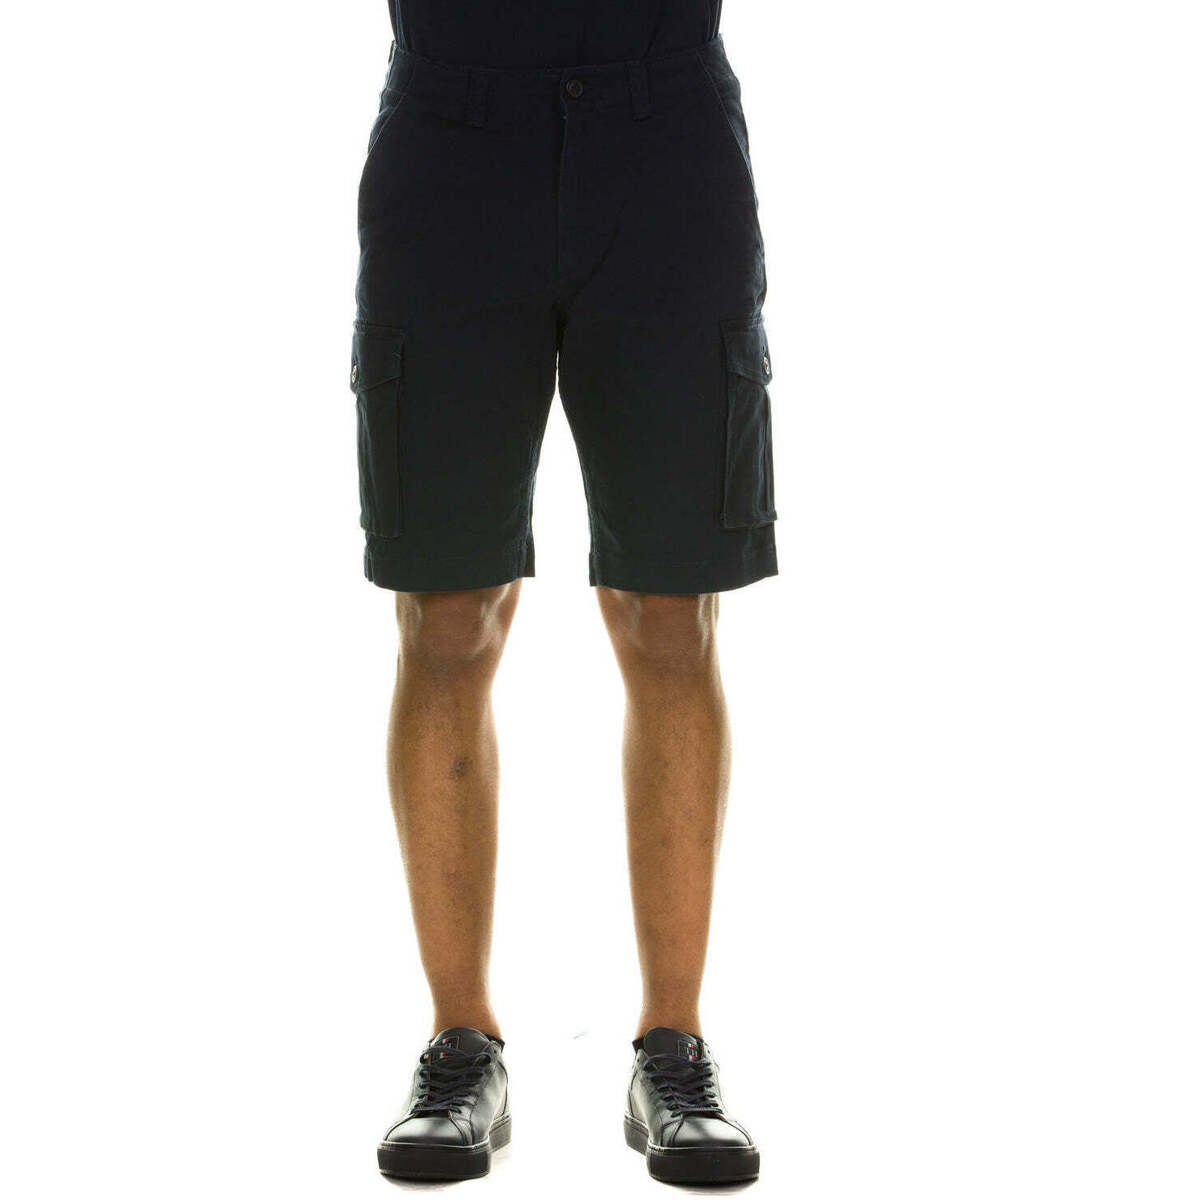 Vêtements Homme Shorts / Bermudas Selected  Bleu